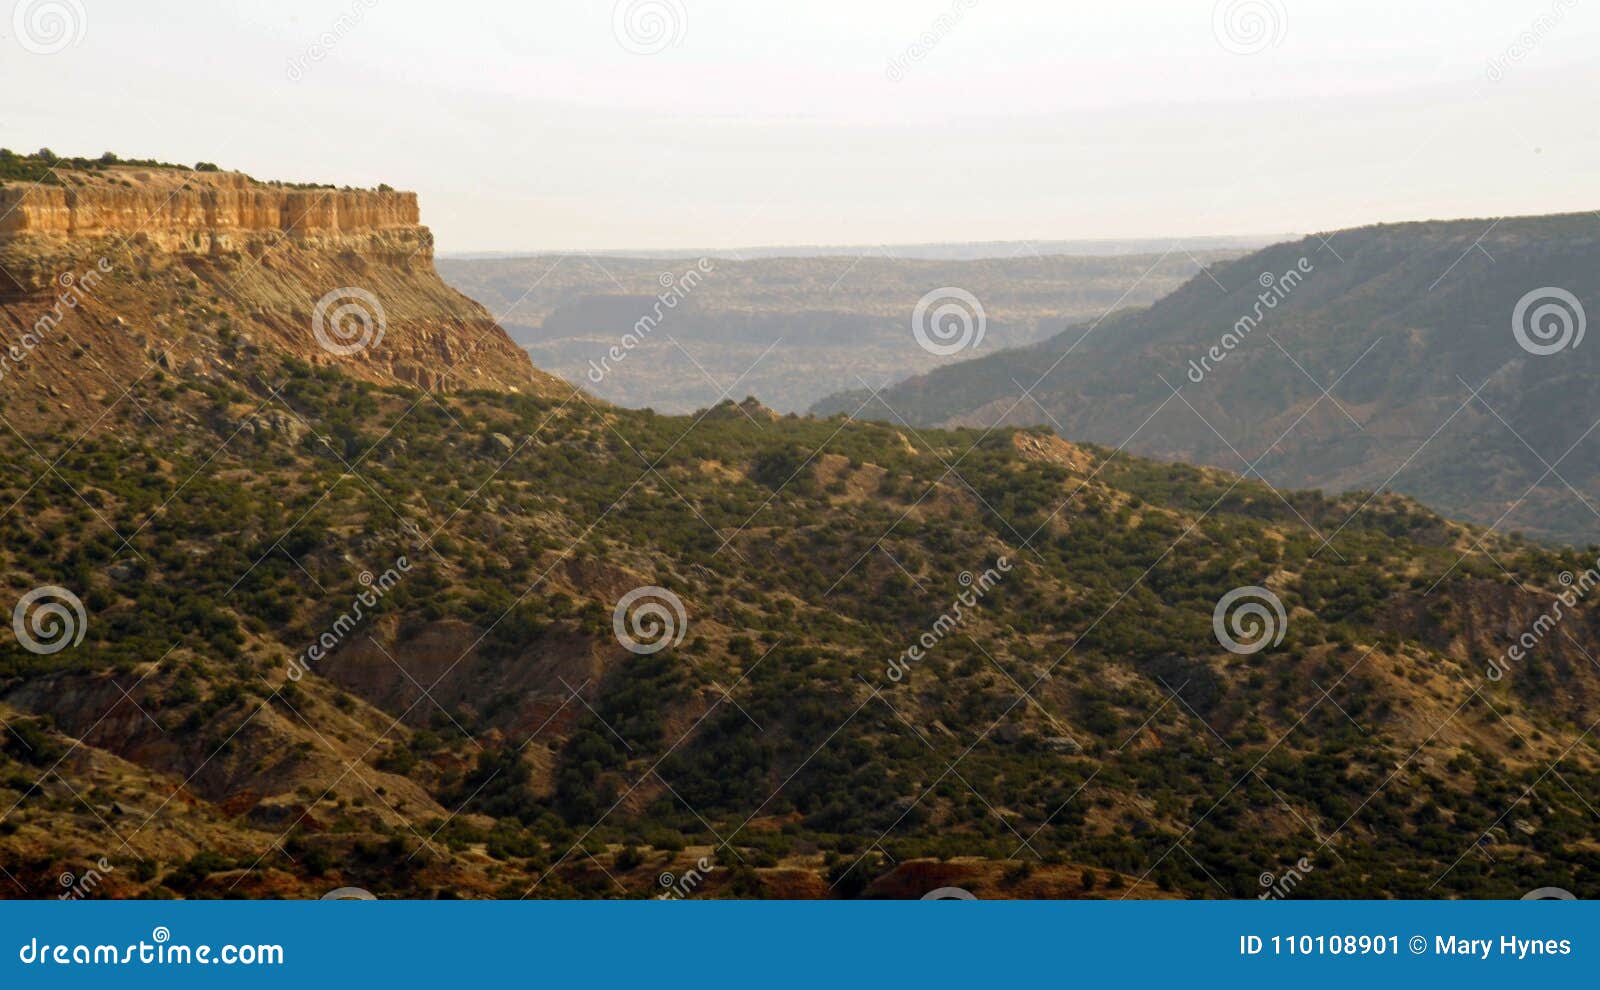 palo duro canyon n texas - western landscape